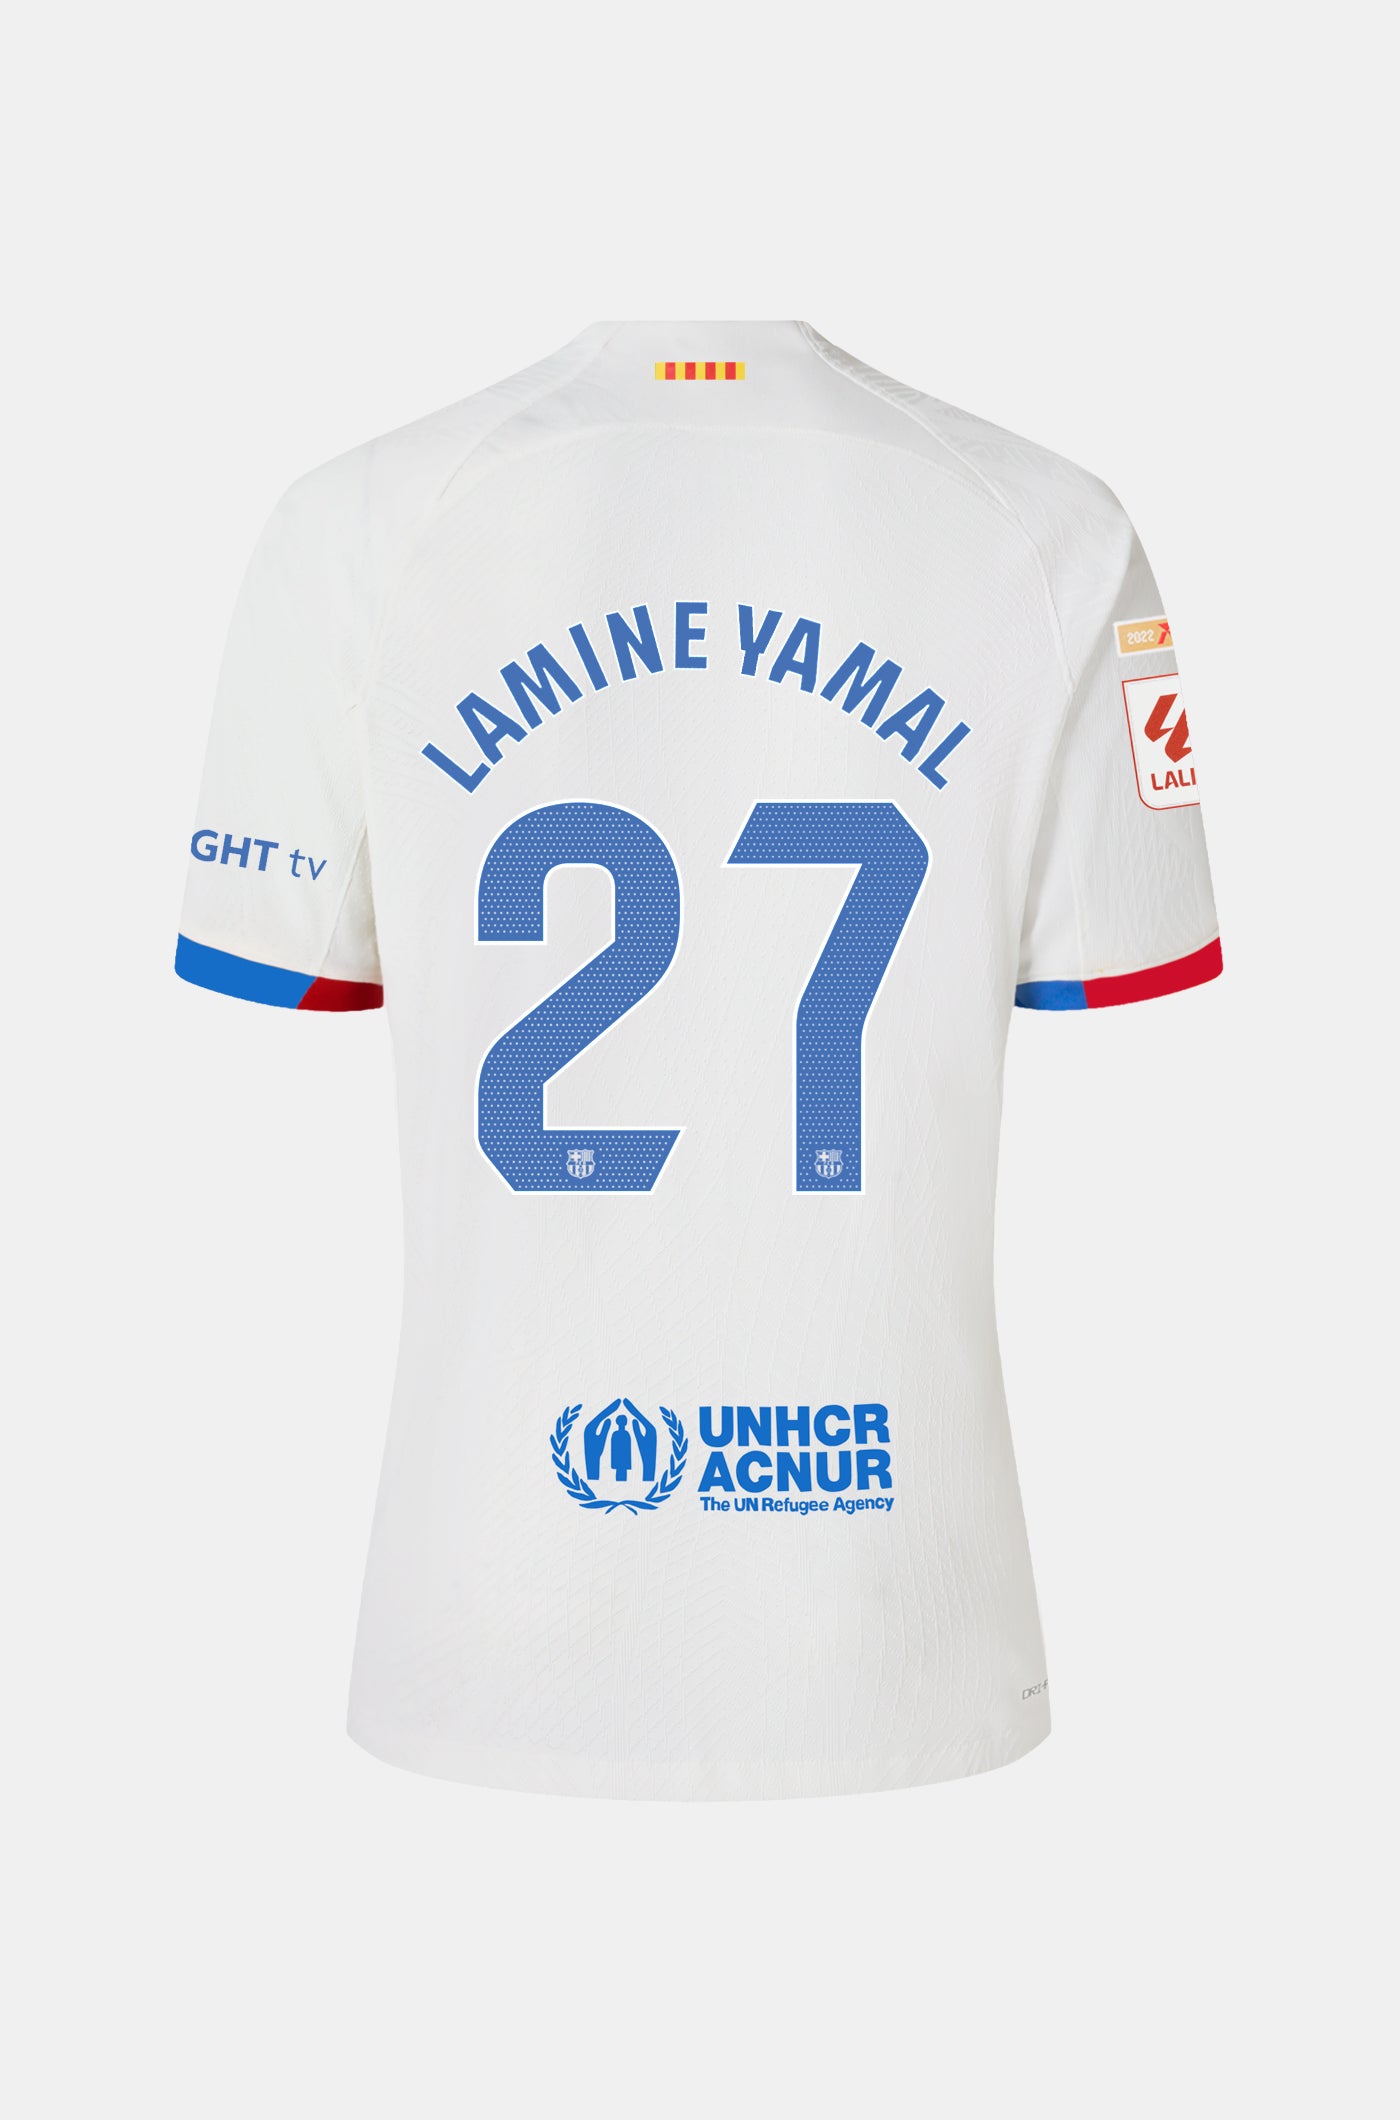 LFP FC Barcelona away shirt 23/24 Player’s Edition  - LAMINE YAMAL